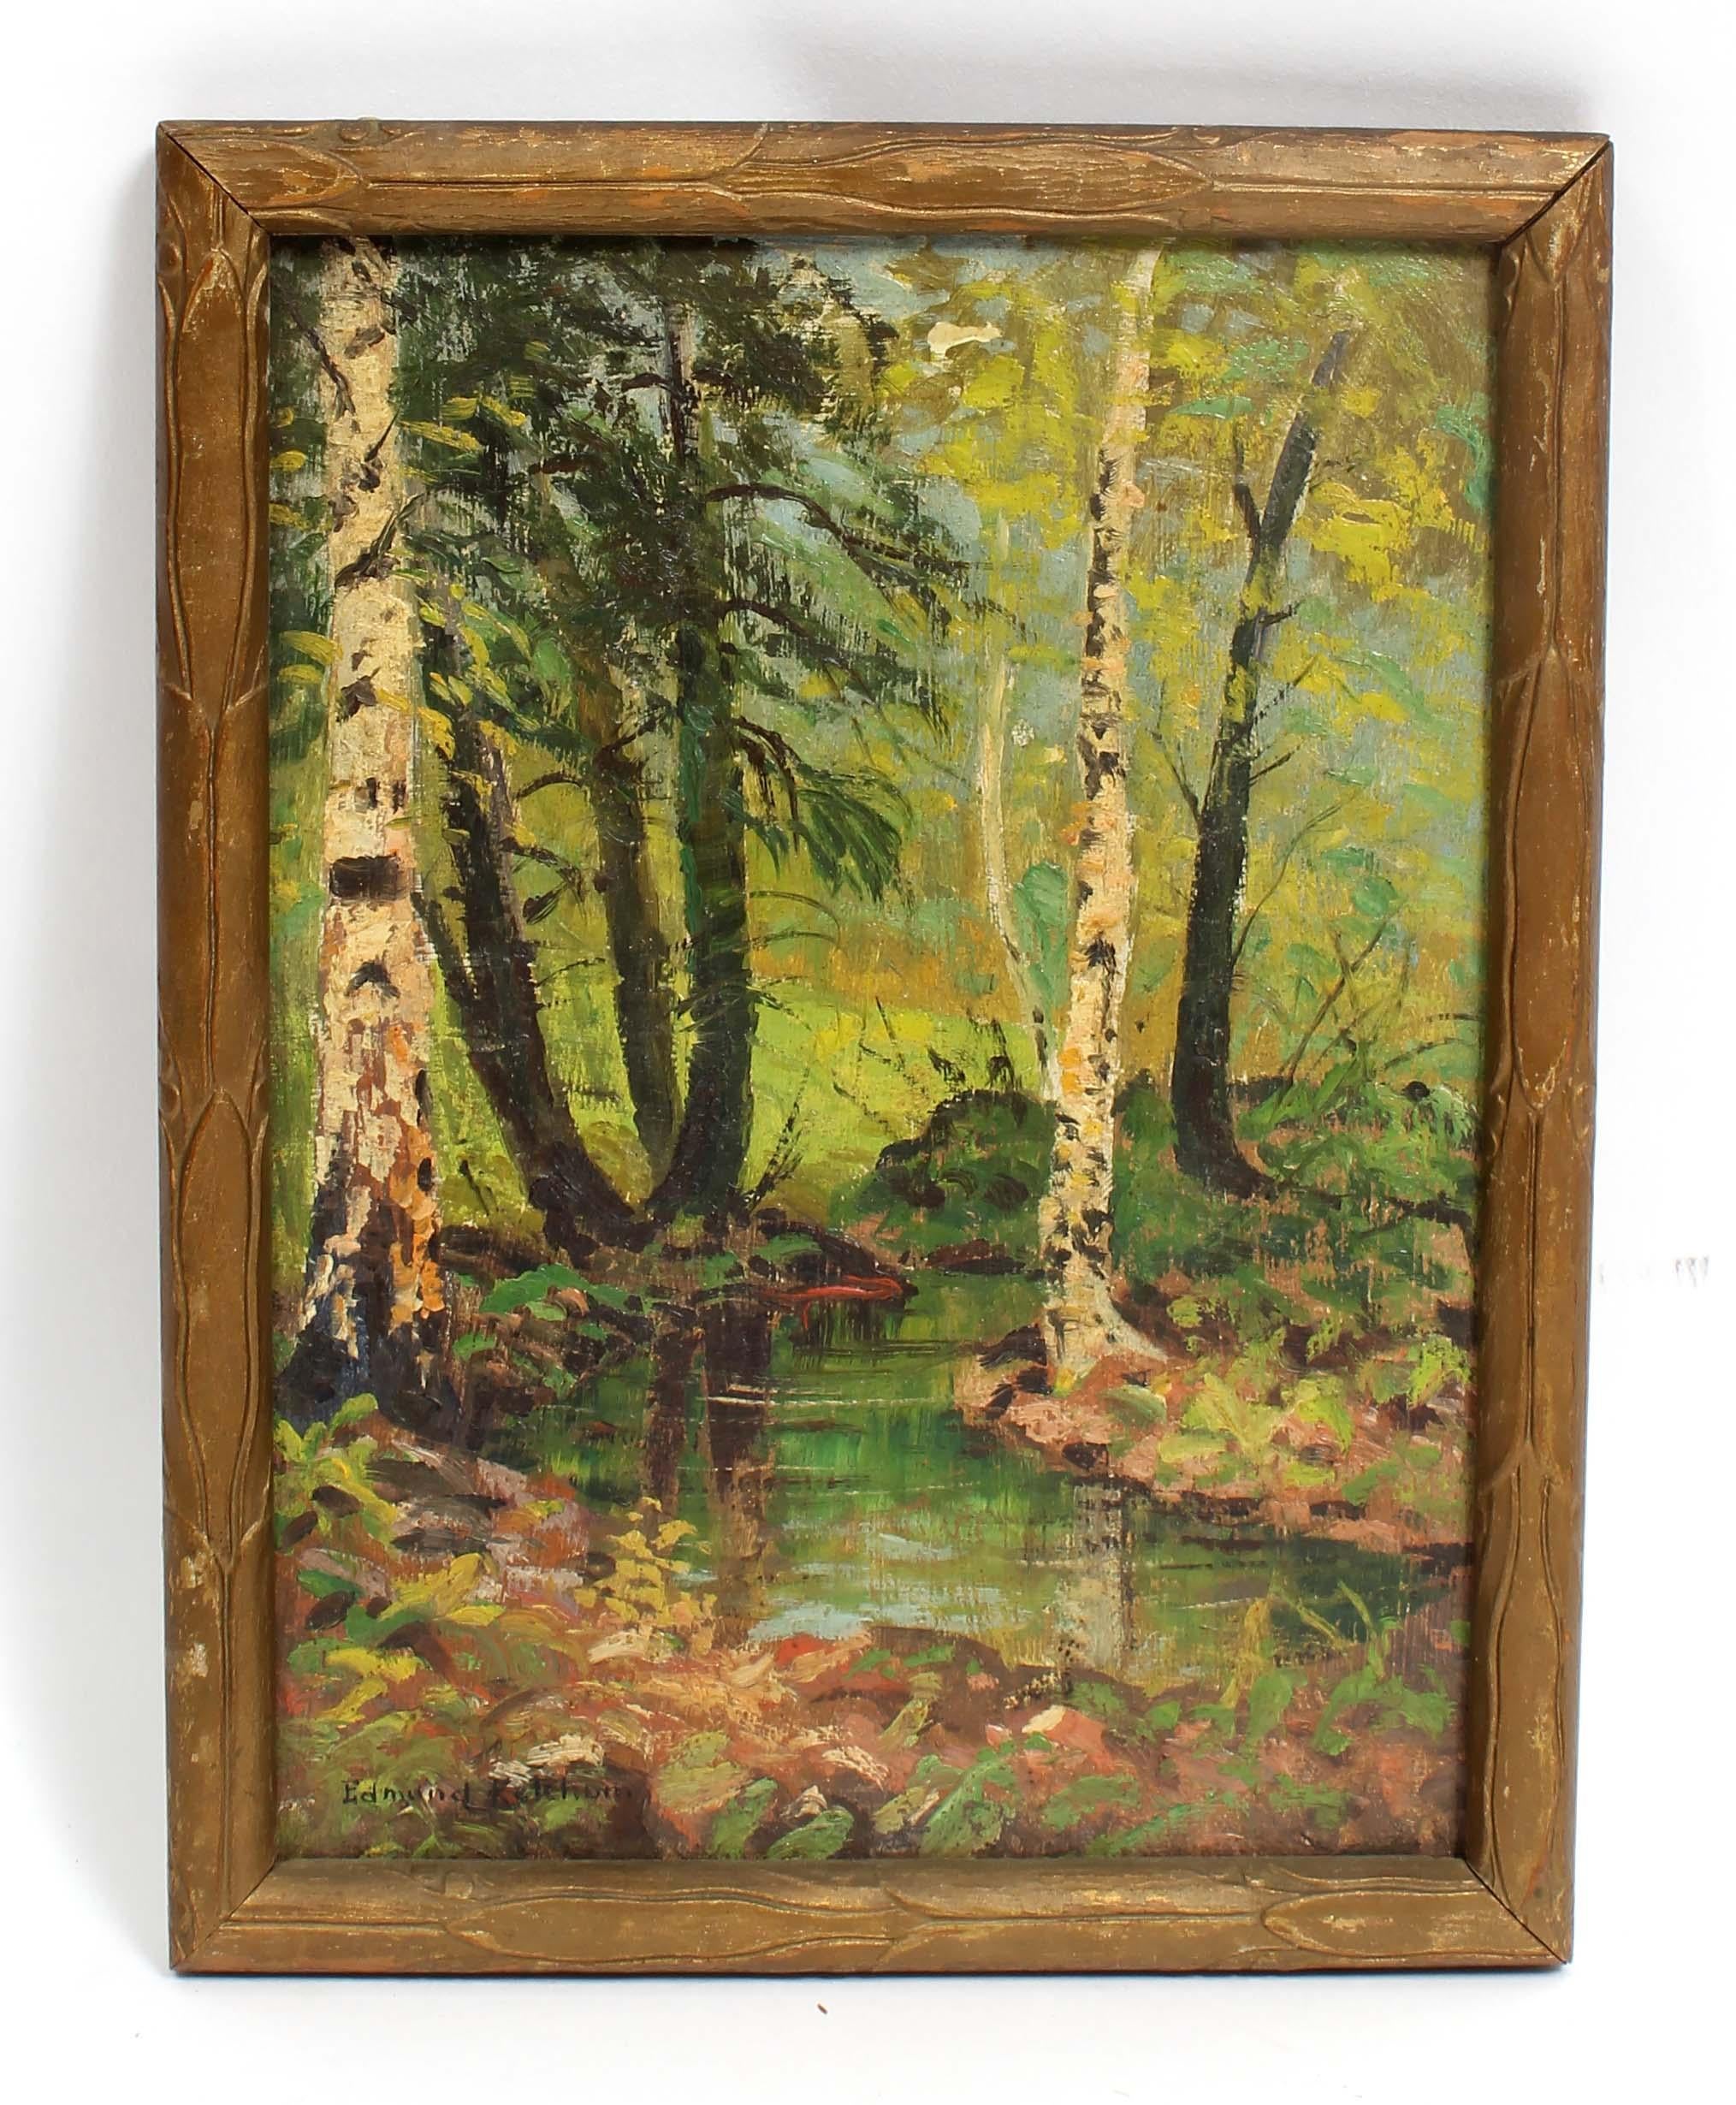 Edmund Ketchum Landscape Painting - Miniature Oil Painting American Impressionist 19th Century Forrest Interior 